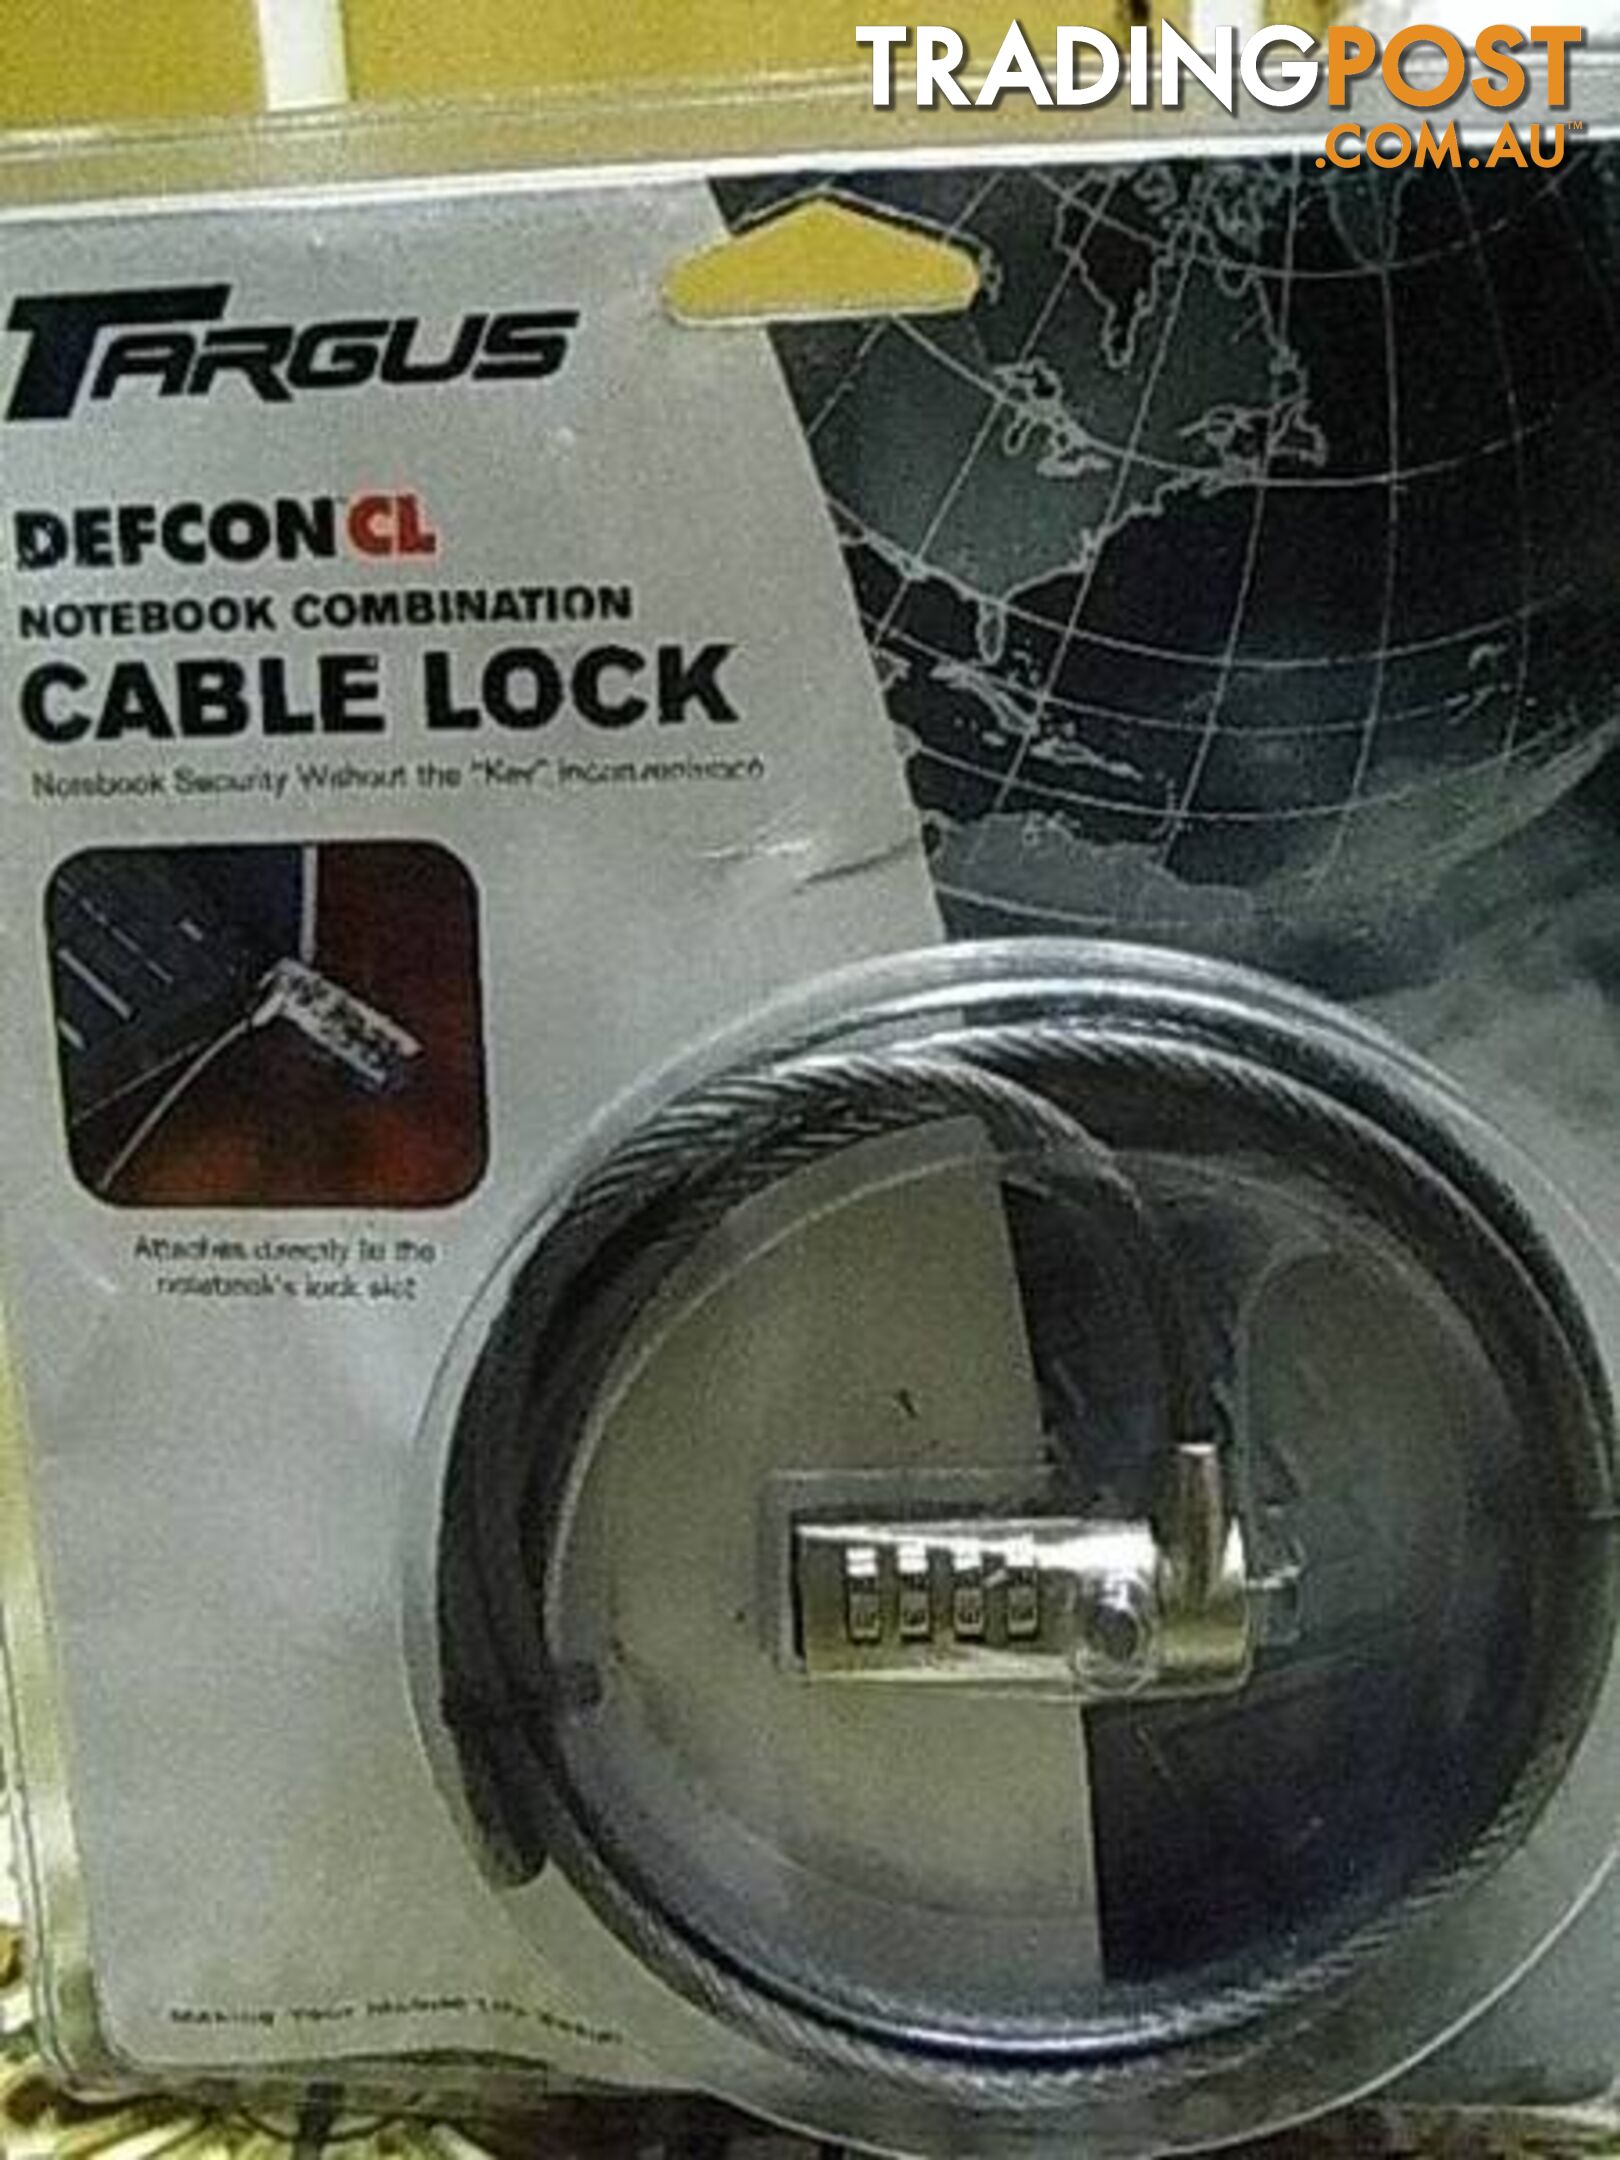 Targus 6.5' Defcon CL Laptop Cable Lock (PA410U) Security